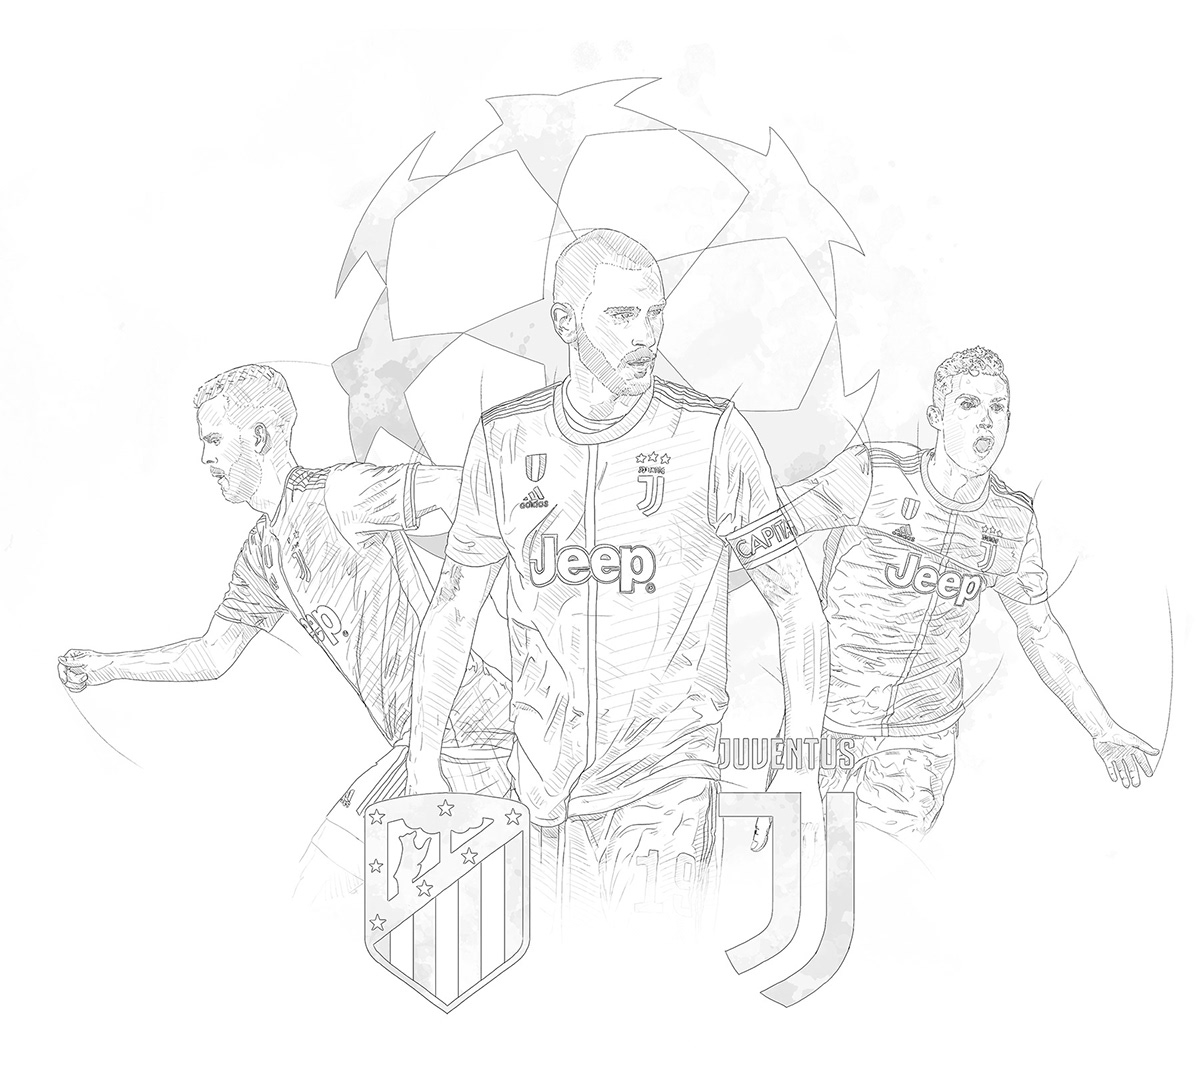 Process drawings, wip for Juventus illustrations. Ronaldo, pjanic, bonucci